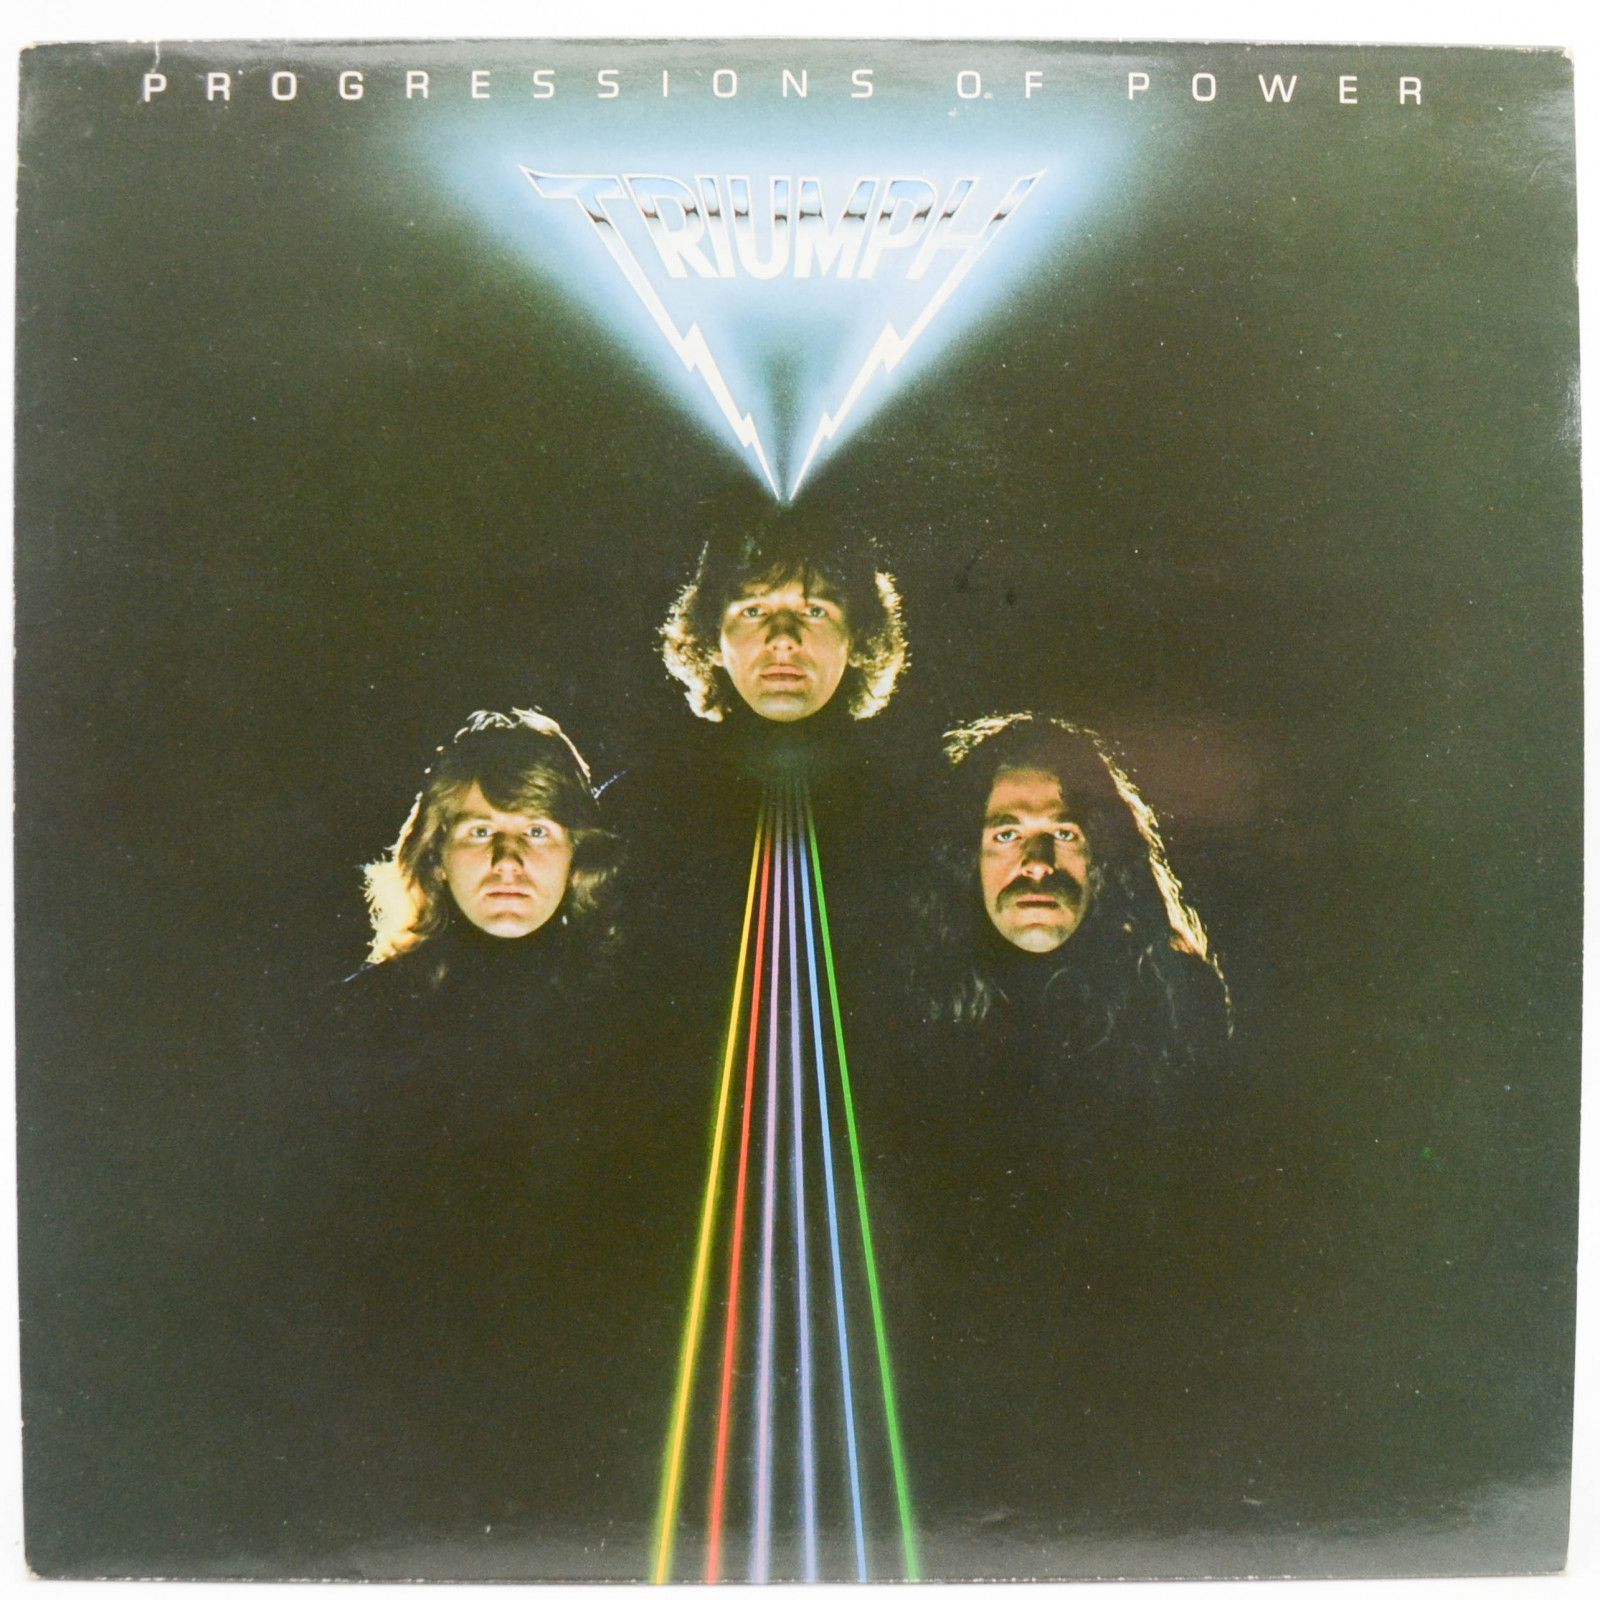 Triumph — Progressions Of Power, 1980